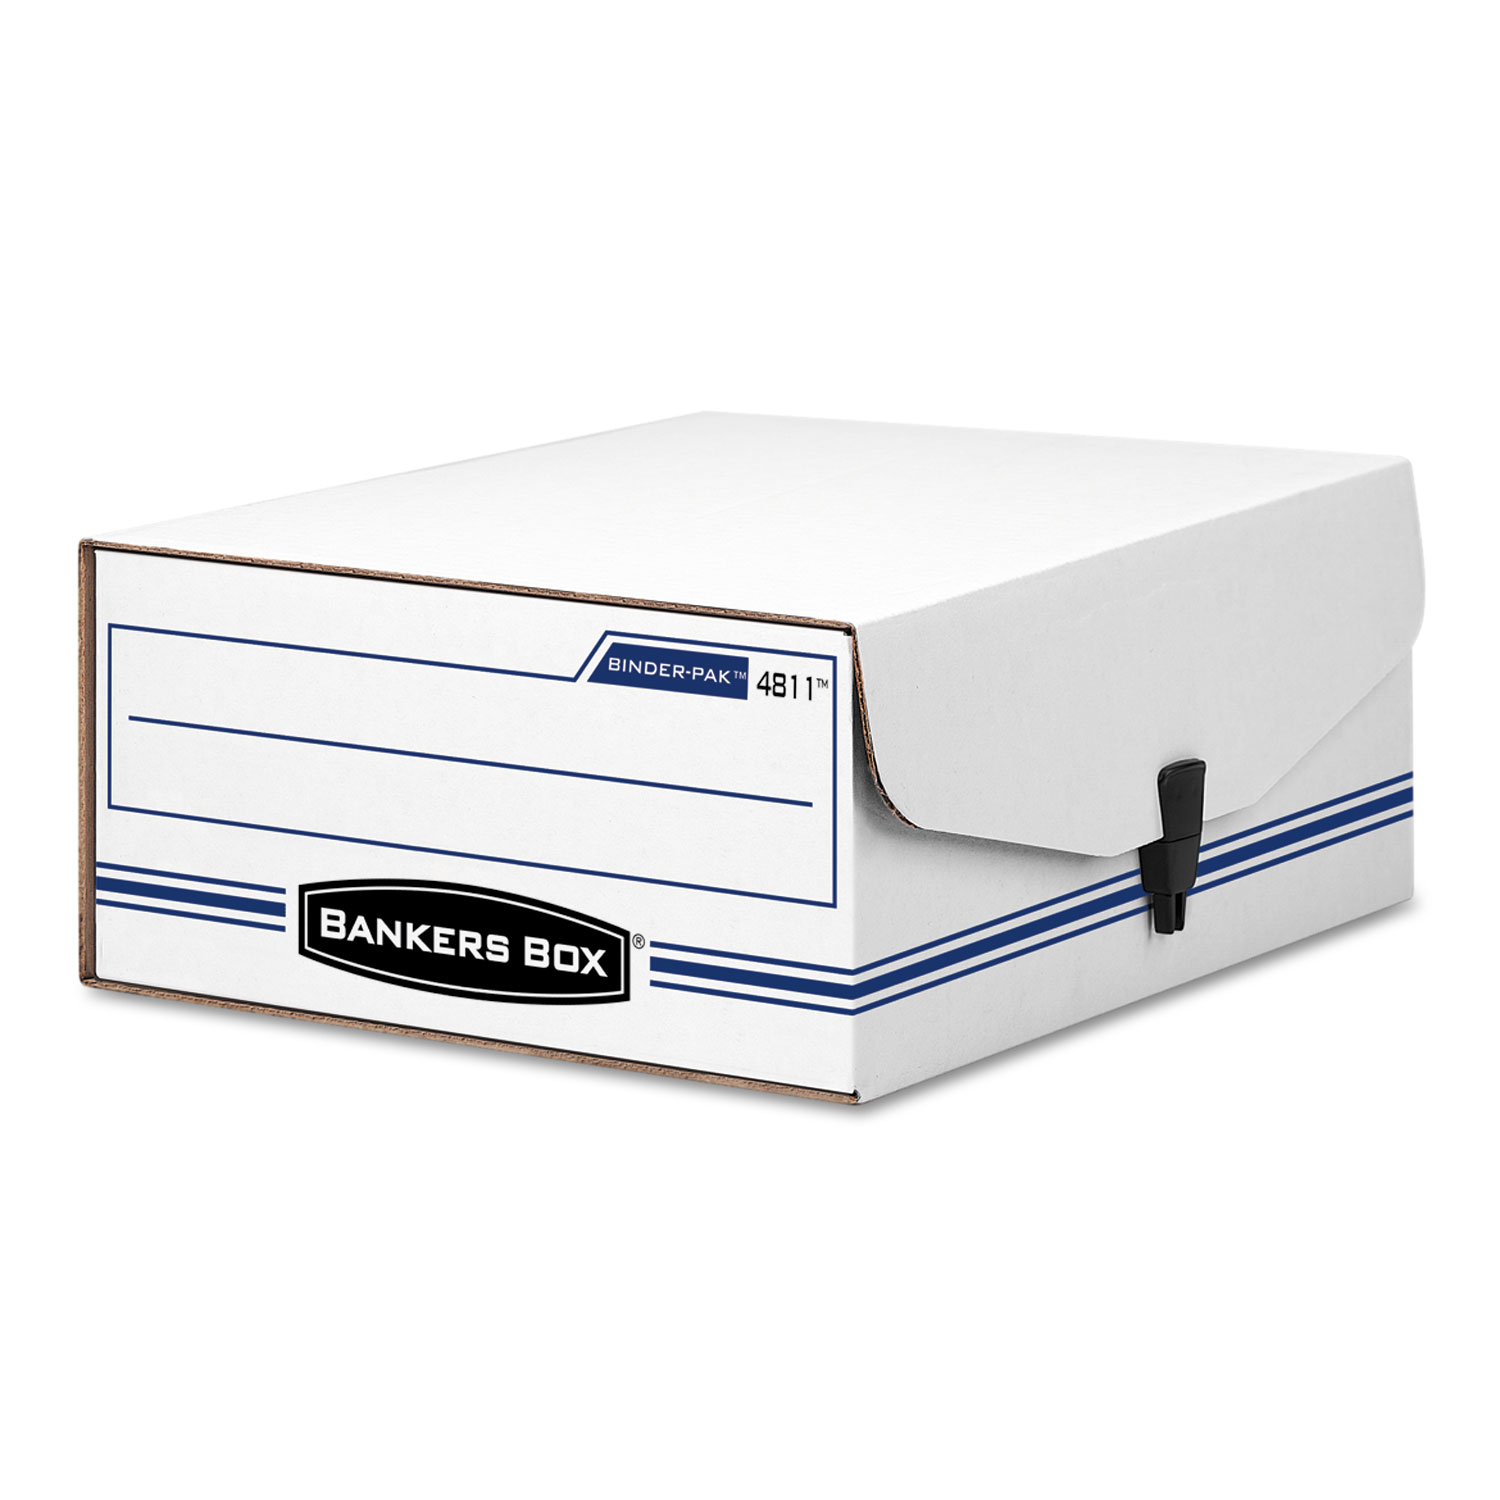 Bankers Box FEL48110 LIBERTY Binder-Pak Storage Box, Letter, Snap Fastener, White/Blue